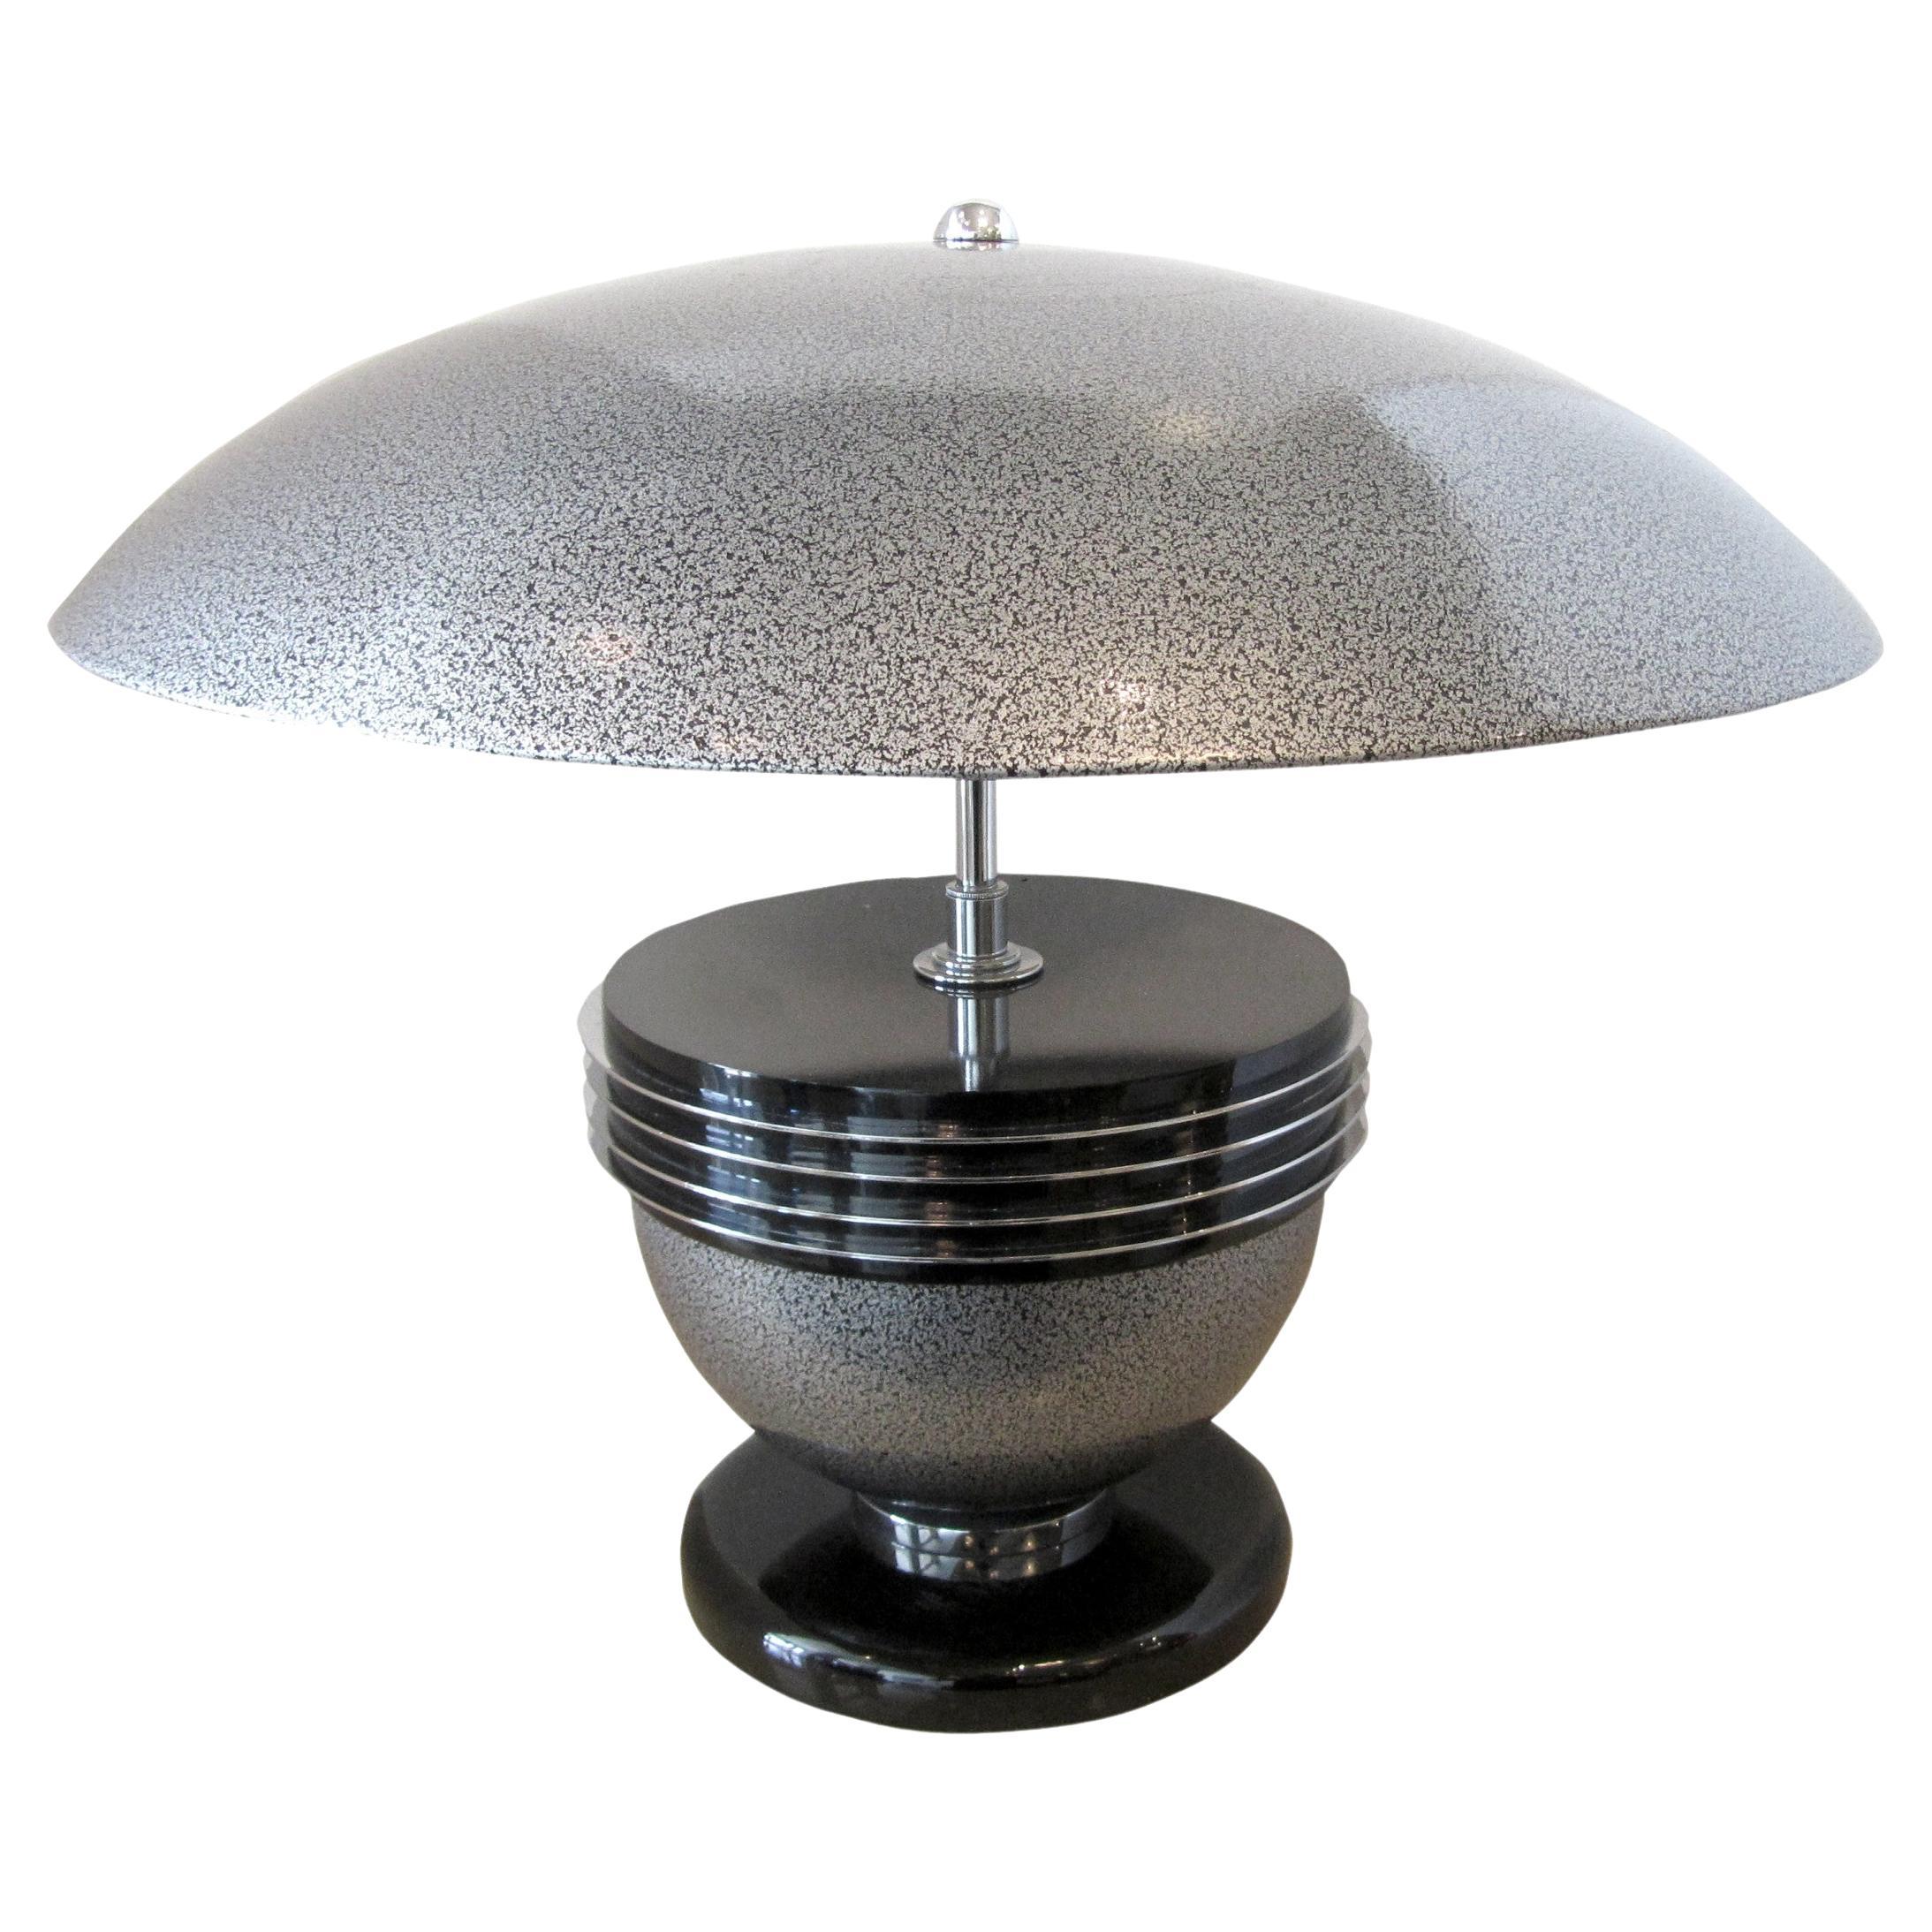 Walter Prosper Midcentury American Modern Table Lamp